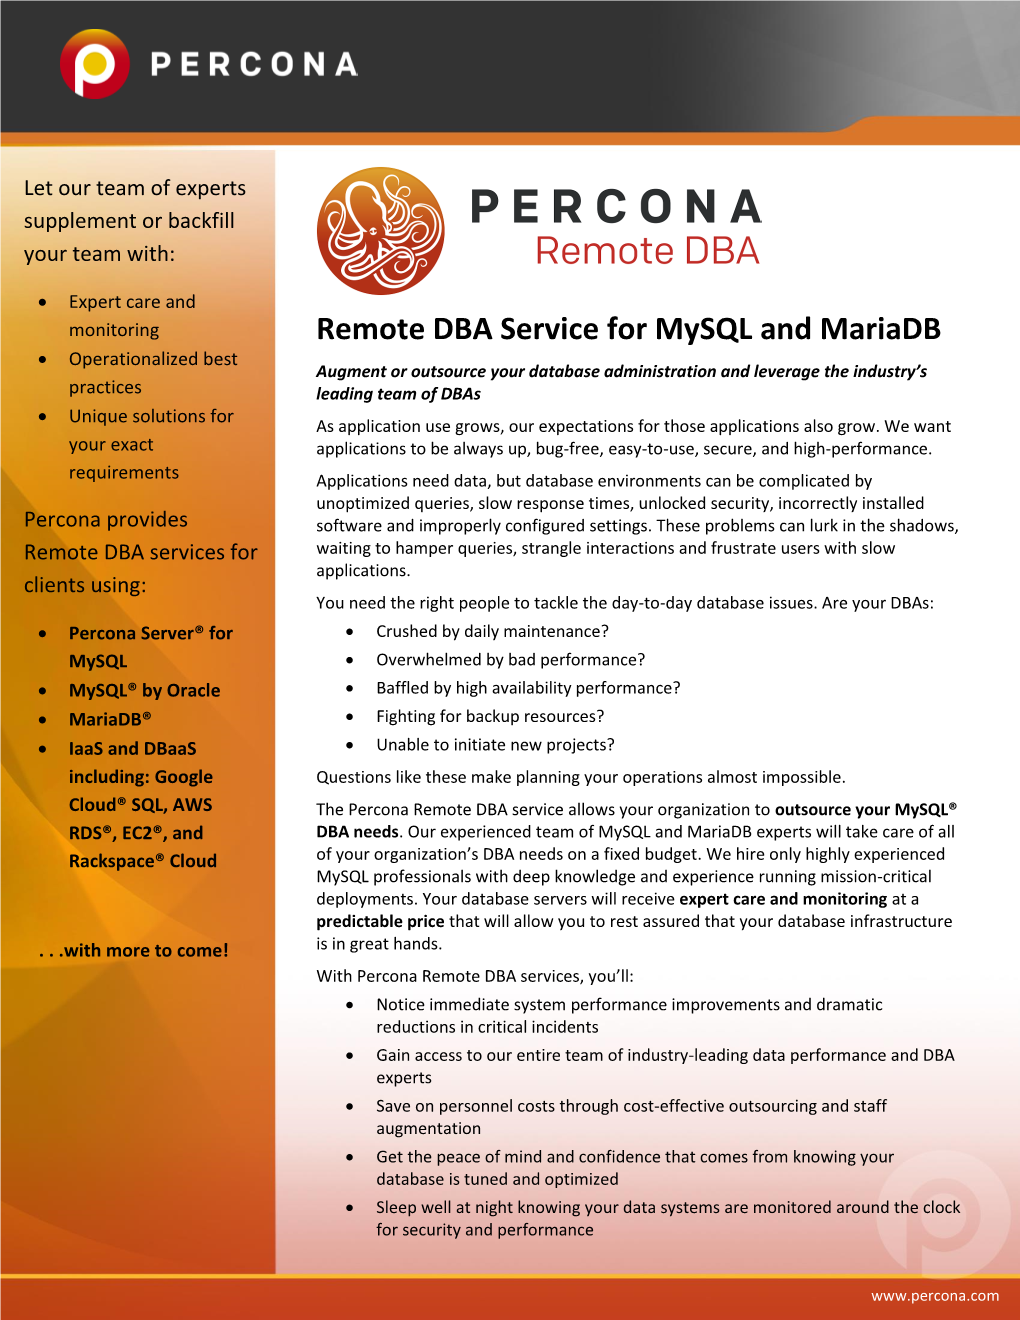 Remote DBA Service for Mysql and Mariadb